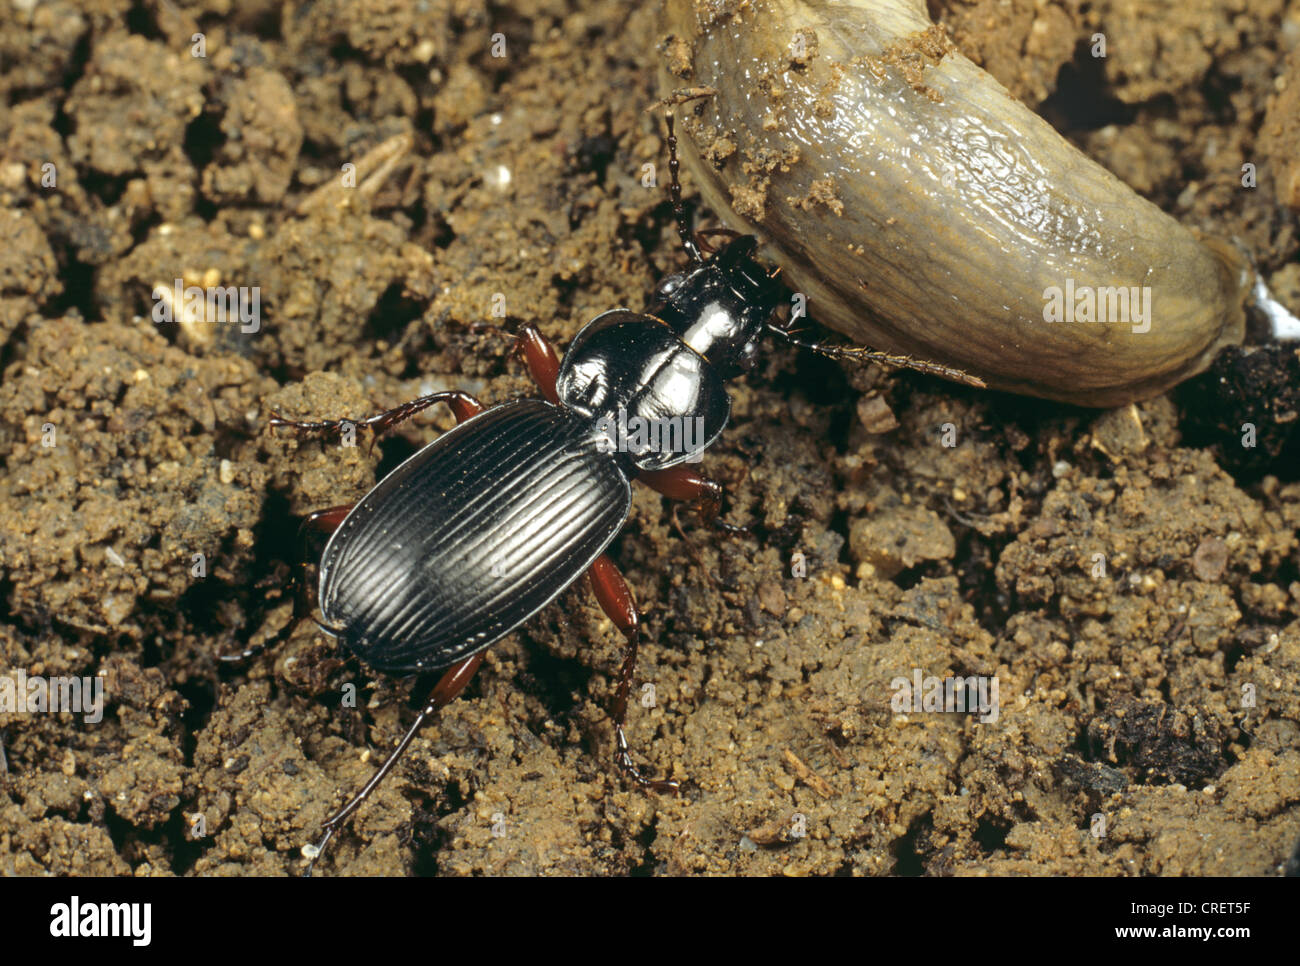 Predatory carabid ground beetle (Pterostichus madidus) attacking a slug Stock Photo